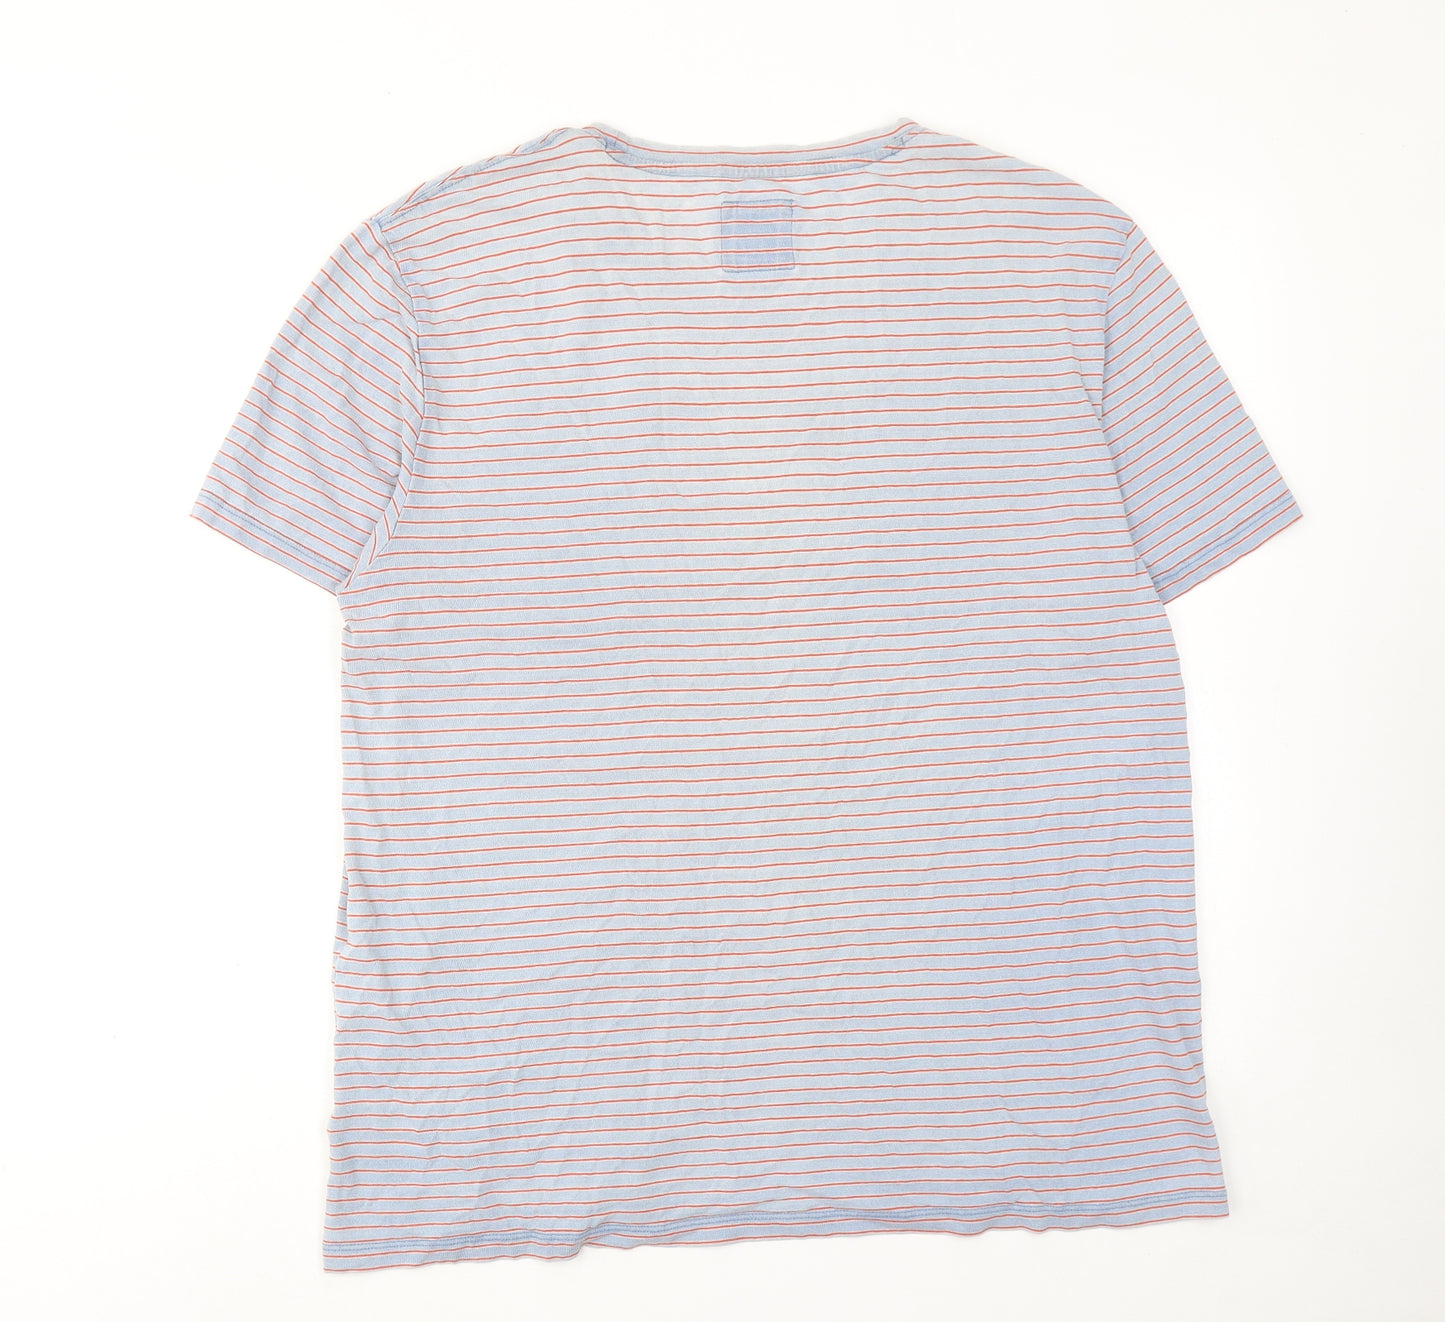 Fat Face Mens Blue Striped Cotton T-Shirt Size XL Round Neck